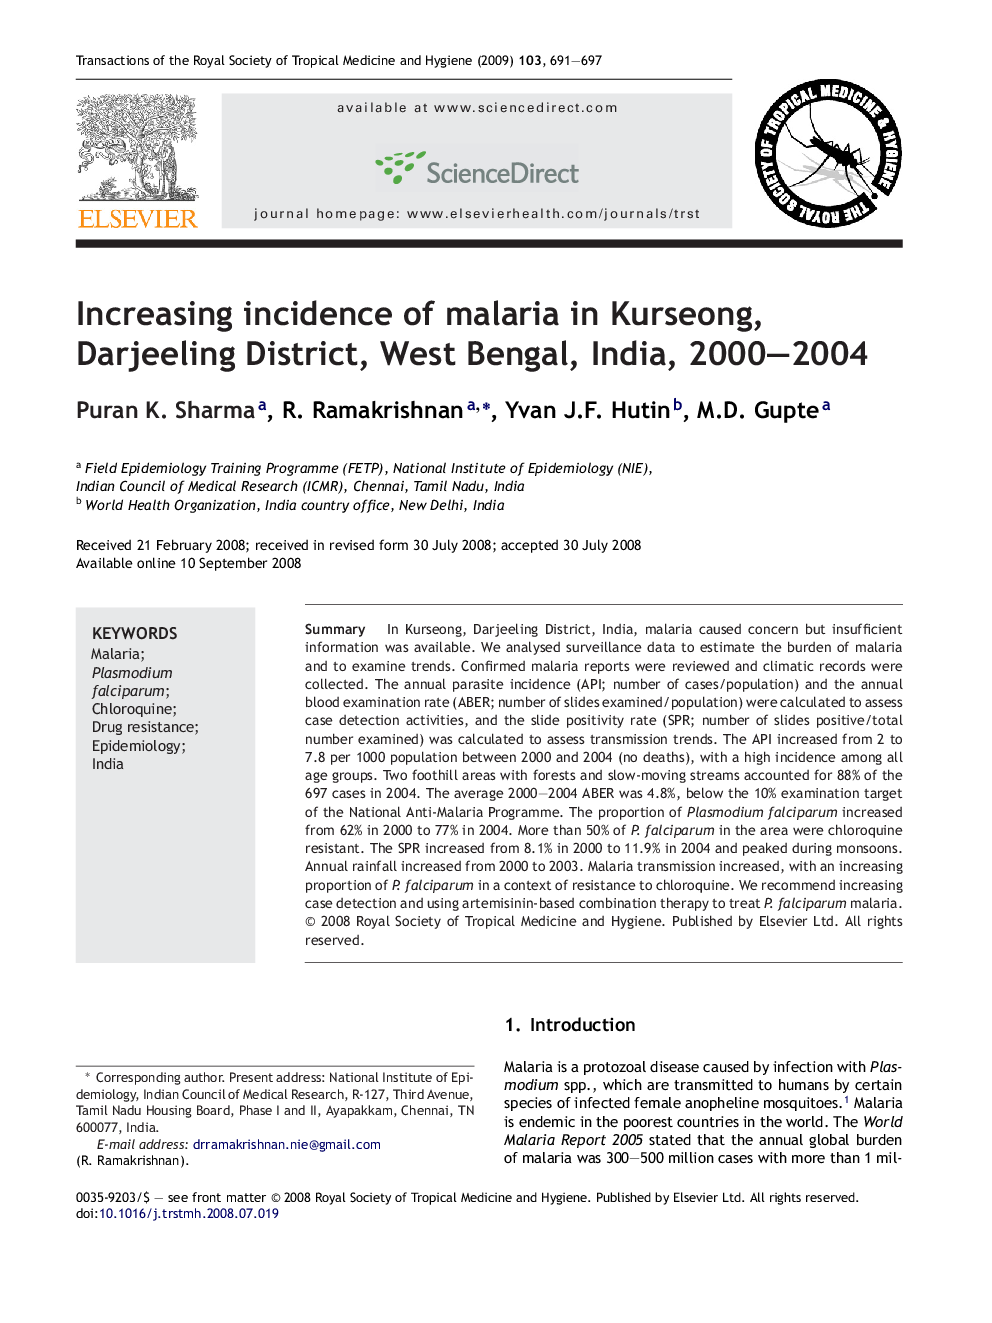 Increasing incidence of malaria in Kurseong, Darjeeling District, West Bengal, India, 2000-2004